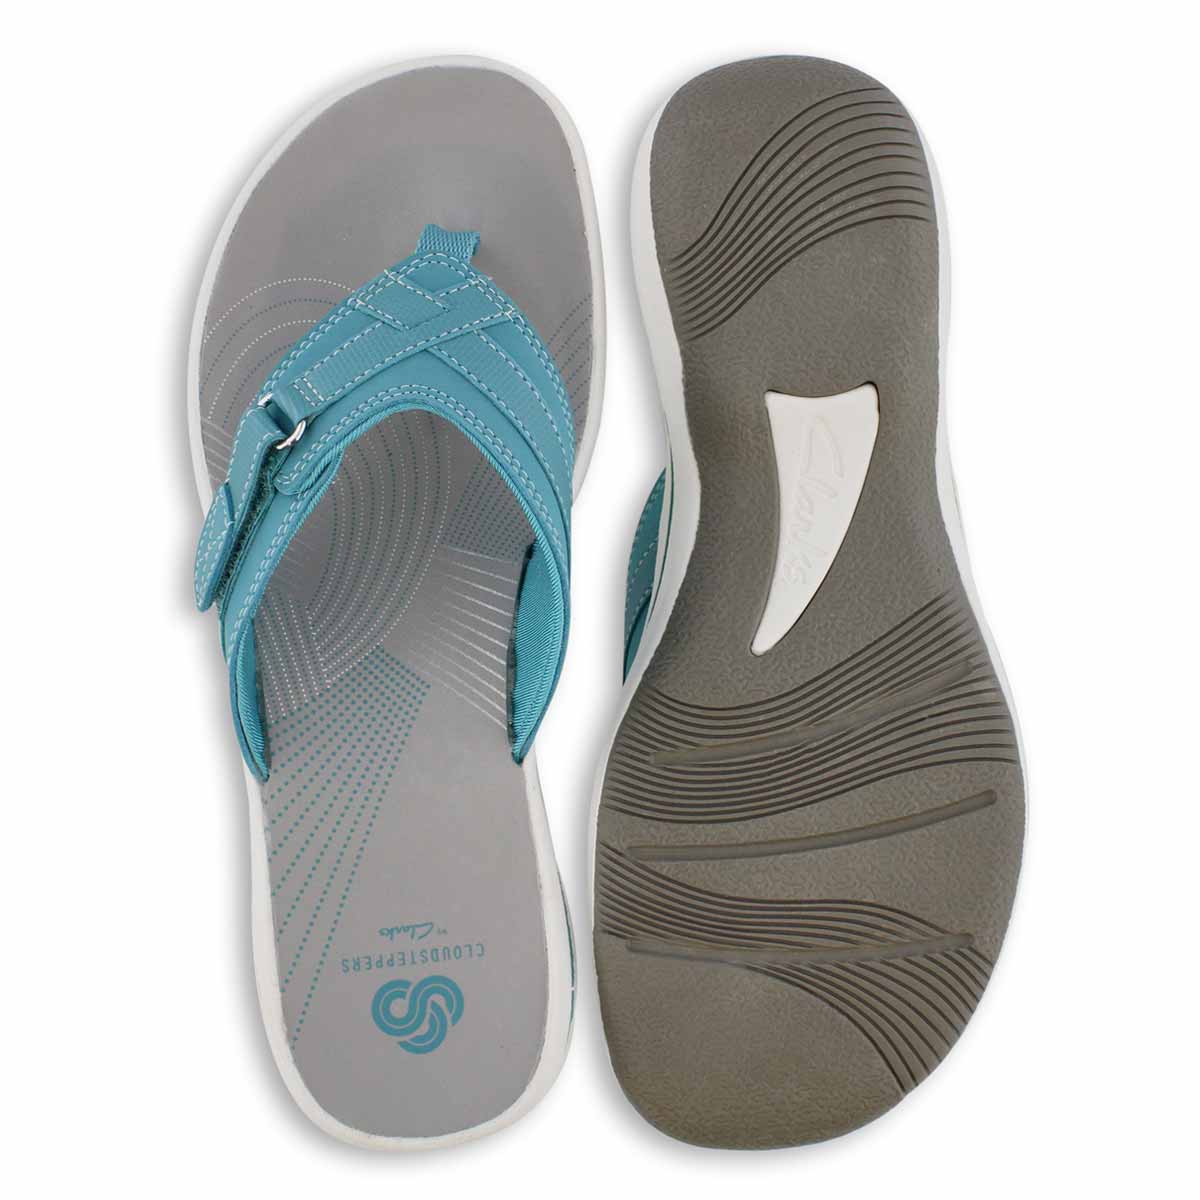 clarks women's breeze sea thong sandals